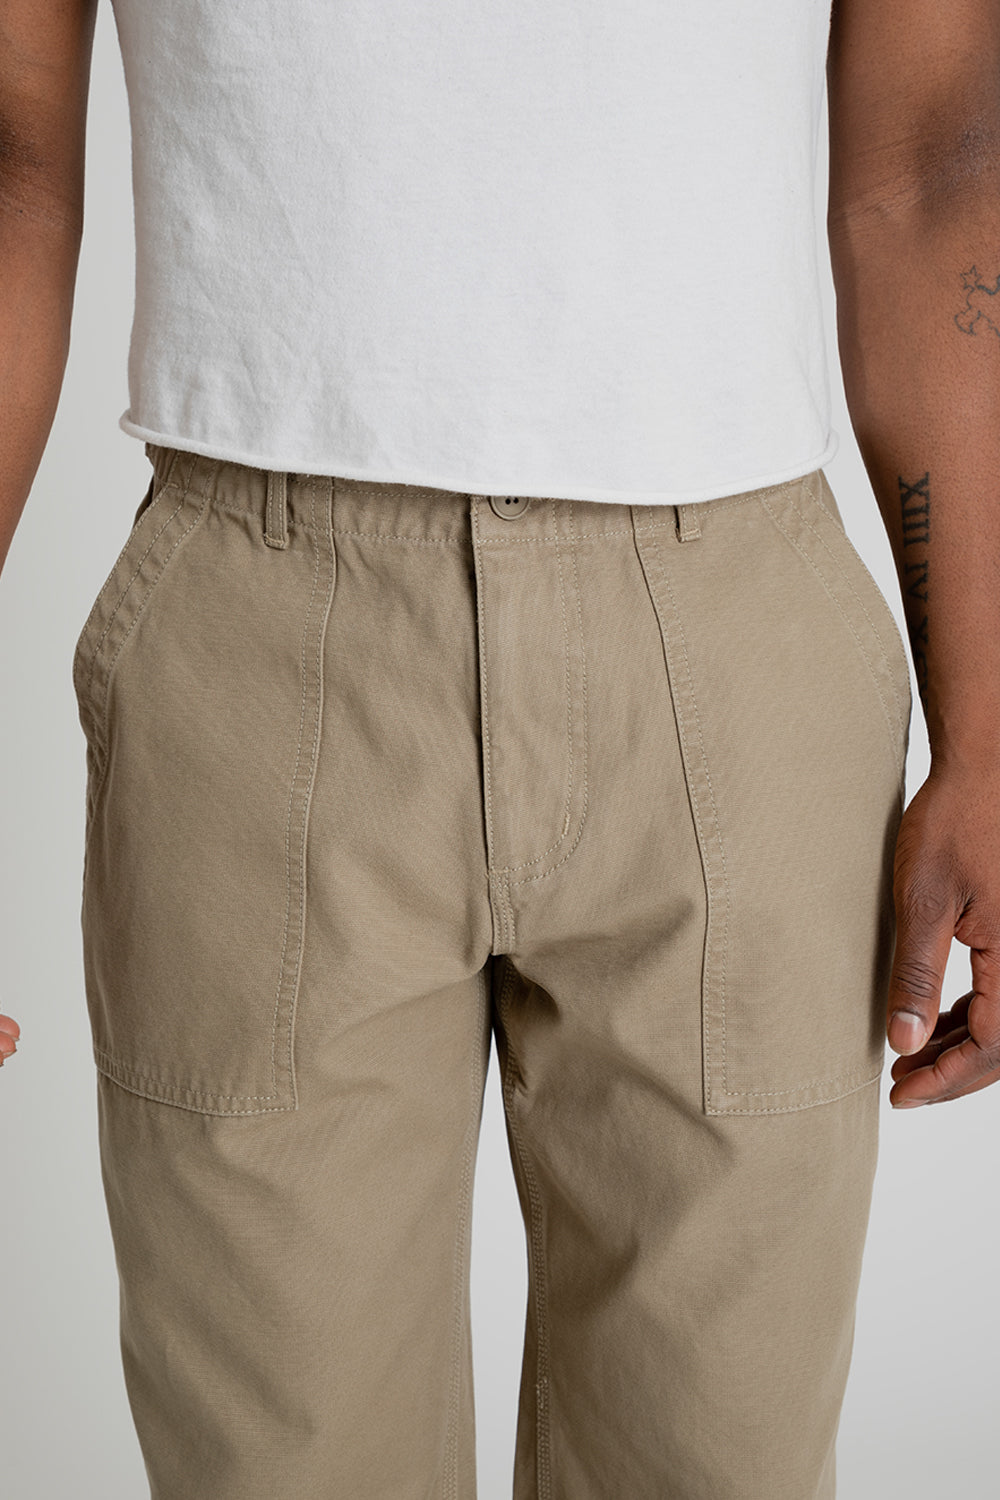 Frizmworks Jungle Cloth Fatigue Pants Khaki Beige Detail 05